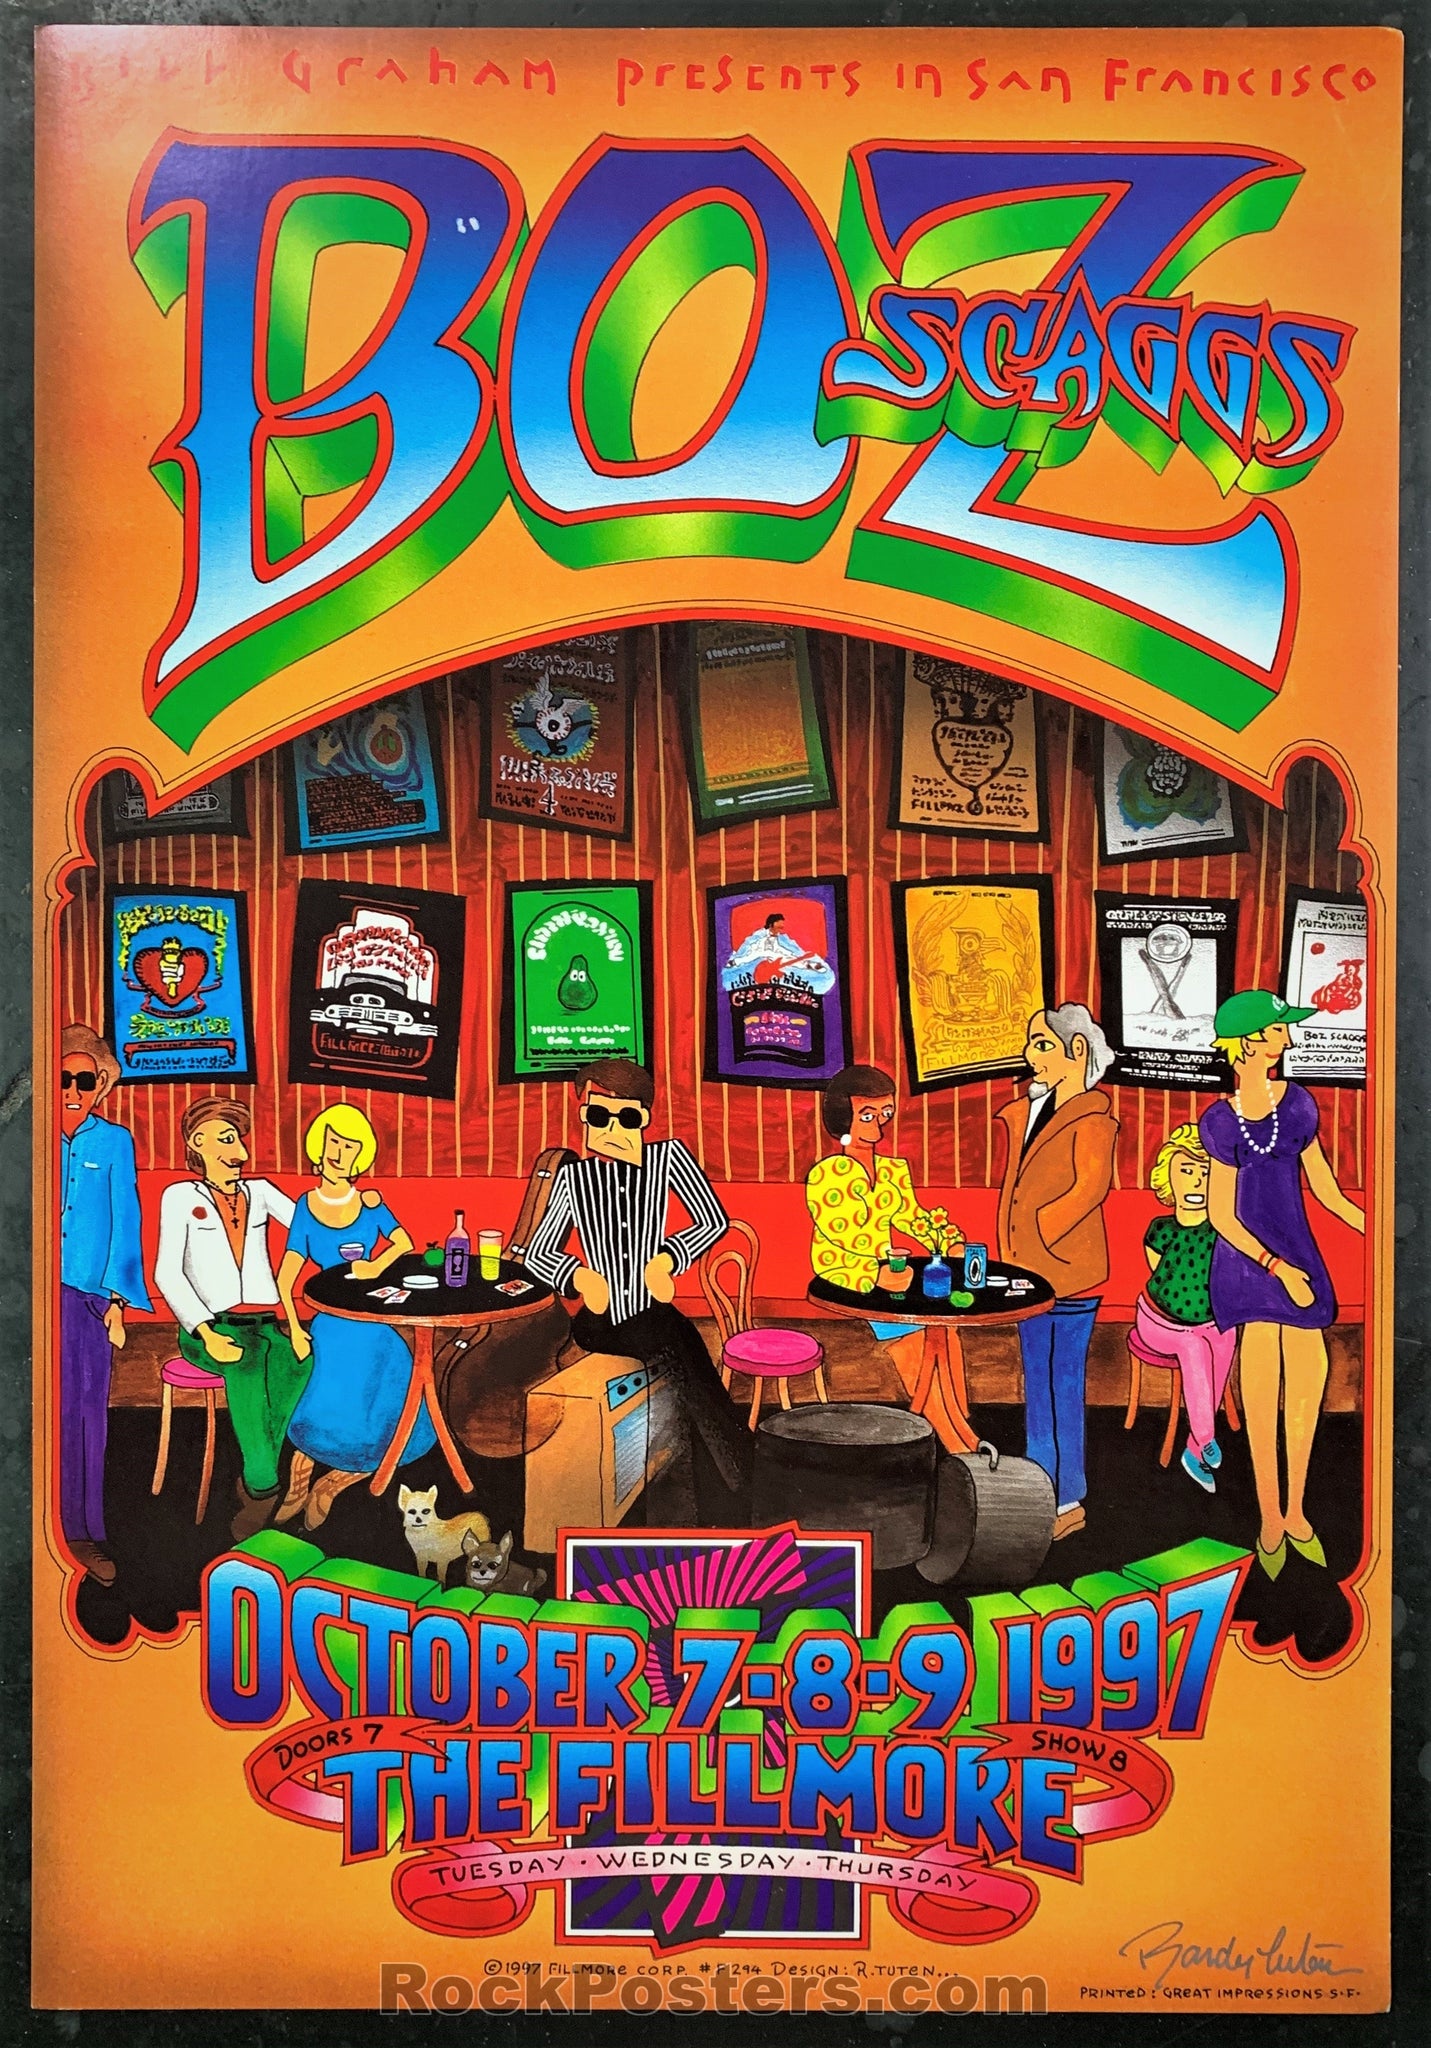 NF-294 - Boz Scaggs Poster - Randy Tuten Signed - Fillmore Auditorium - Near Mint Minus